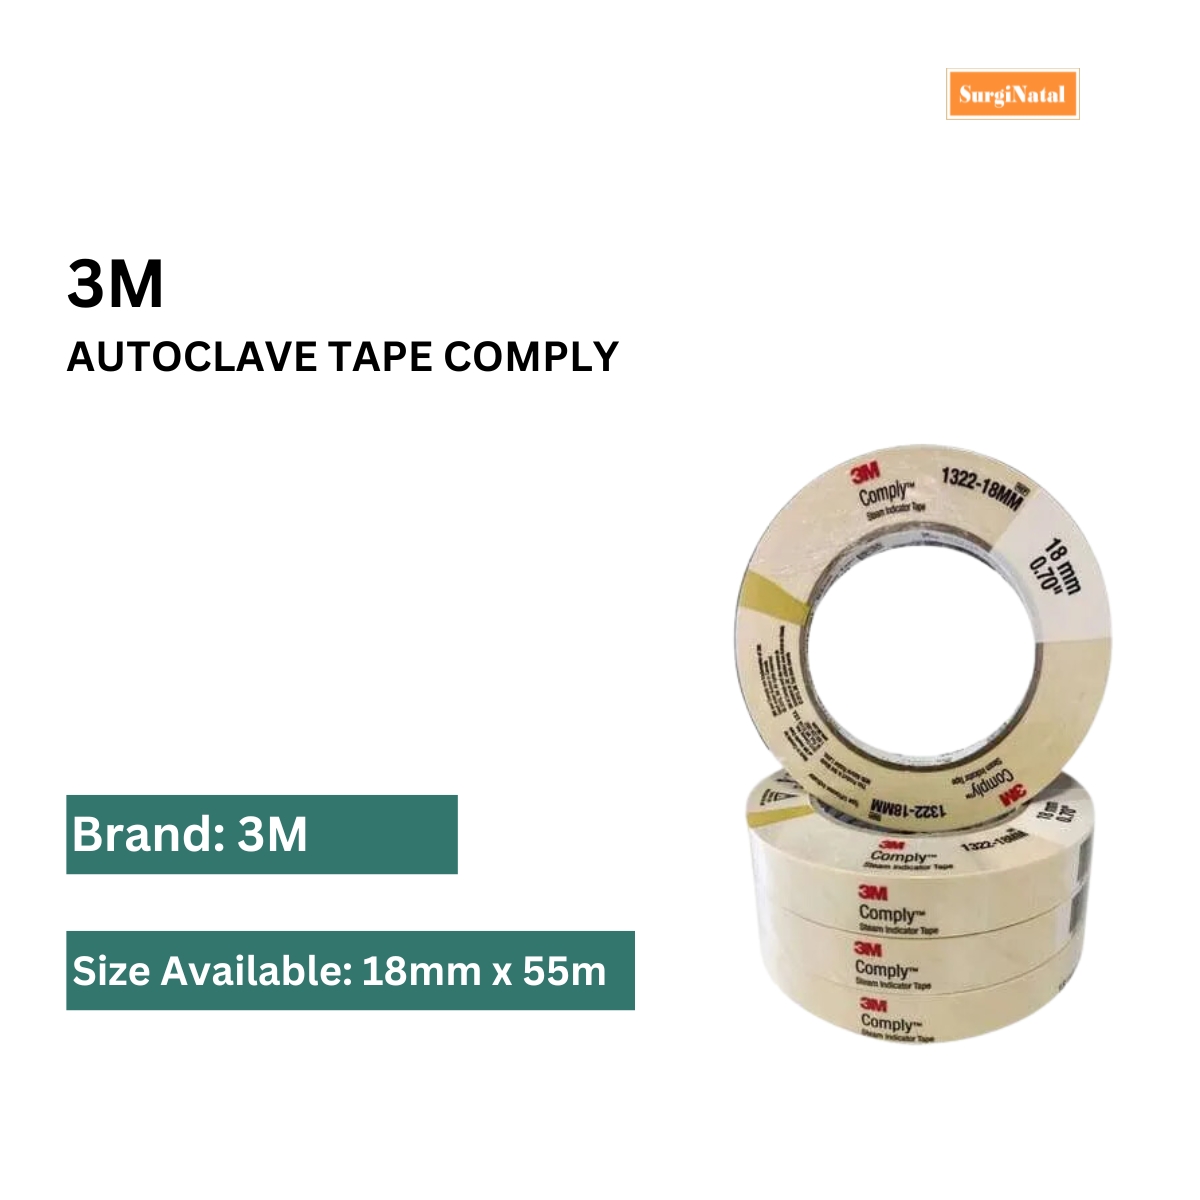  autoclave tape